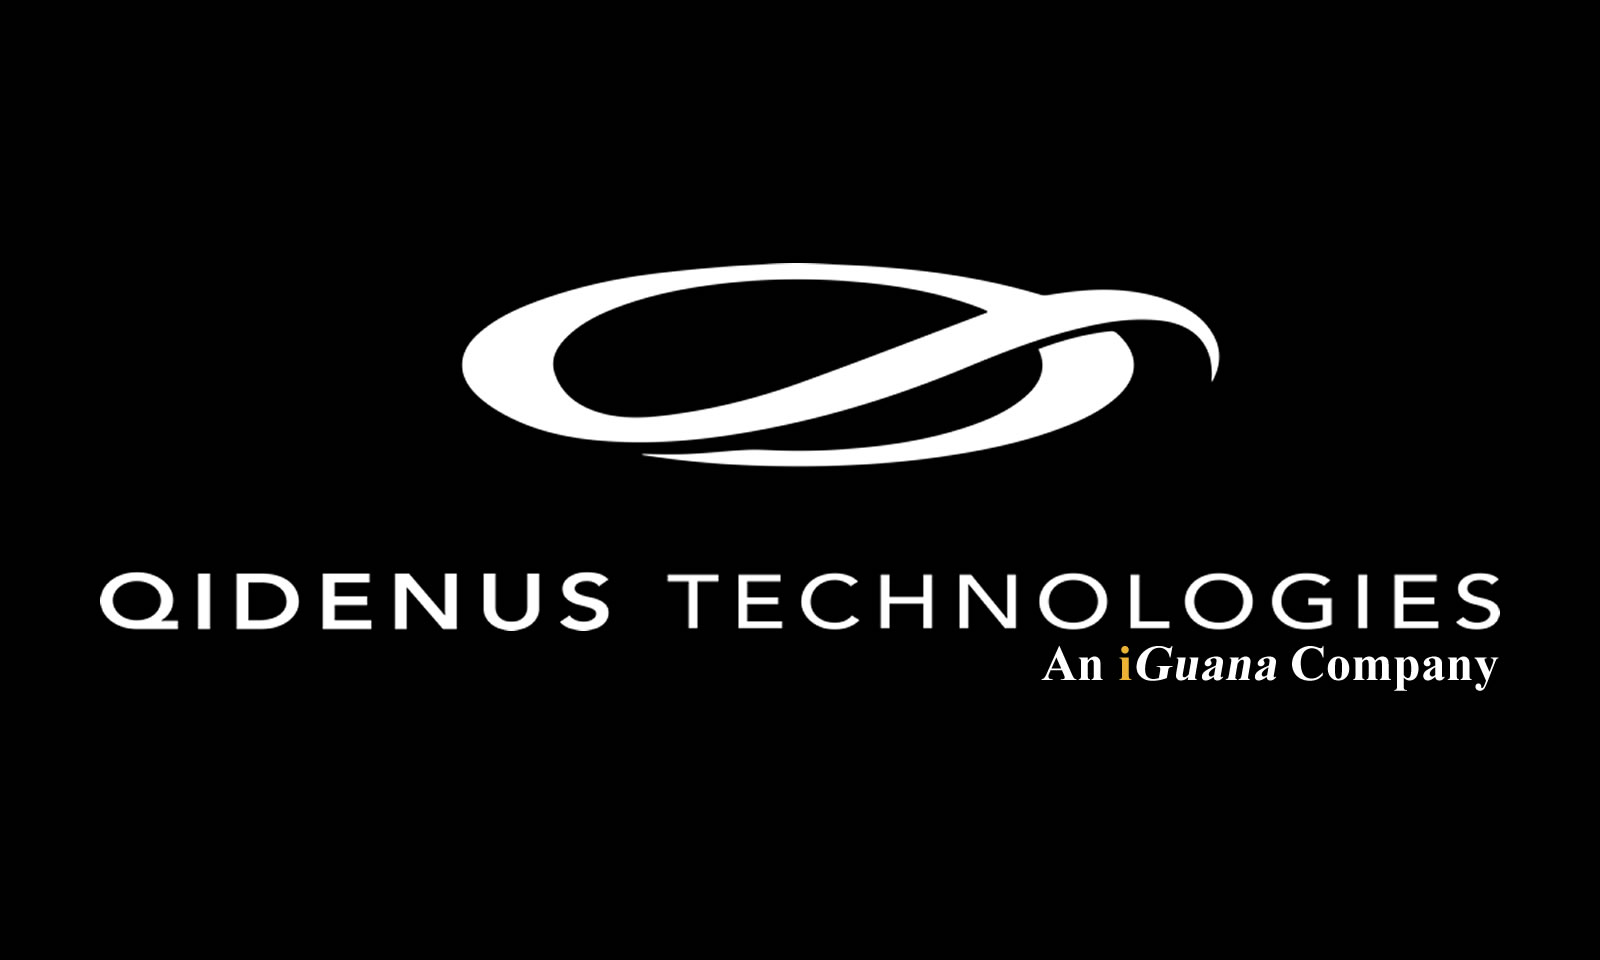 Qidenus Technologies Logo, Qidenus Technologies is an iGuana Company